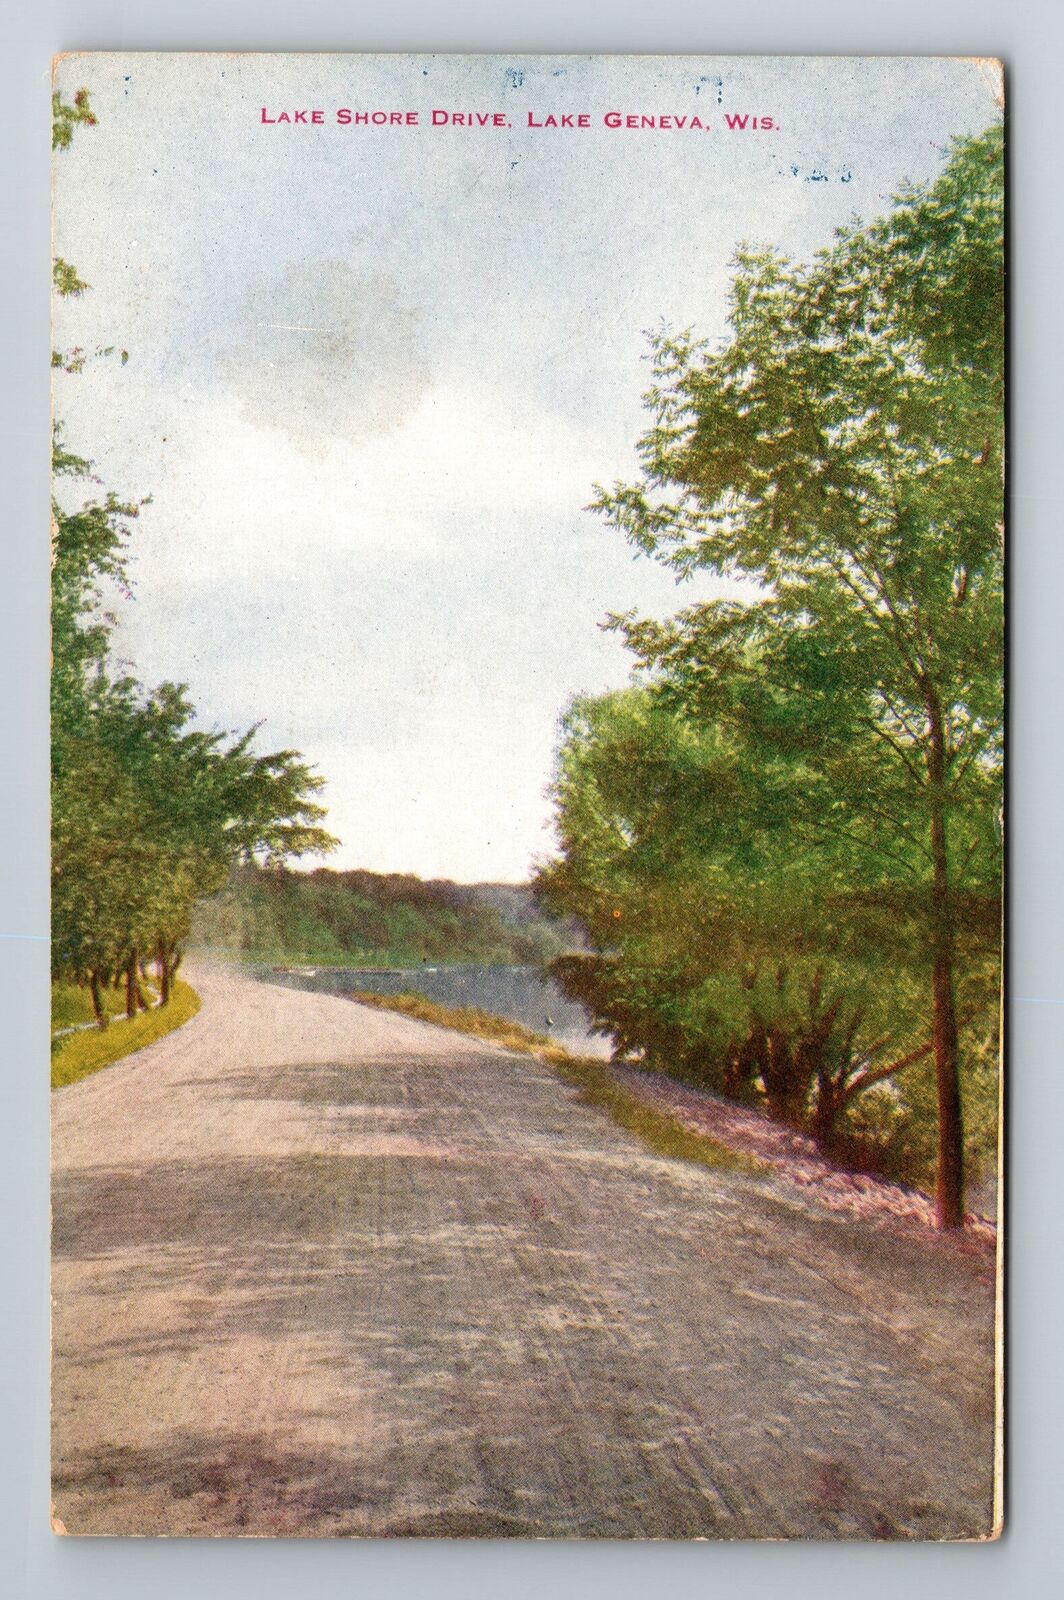 Lake Geneva, WI-Wisconsin, Scenic Lake Shore Drive Antique, Vintage Postcard